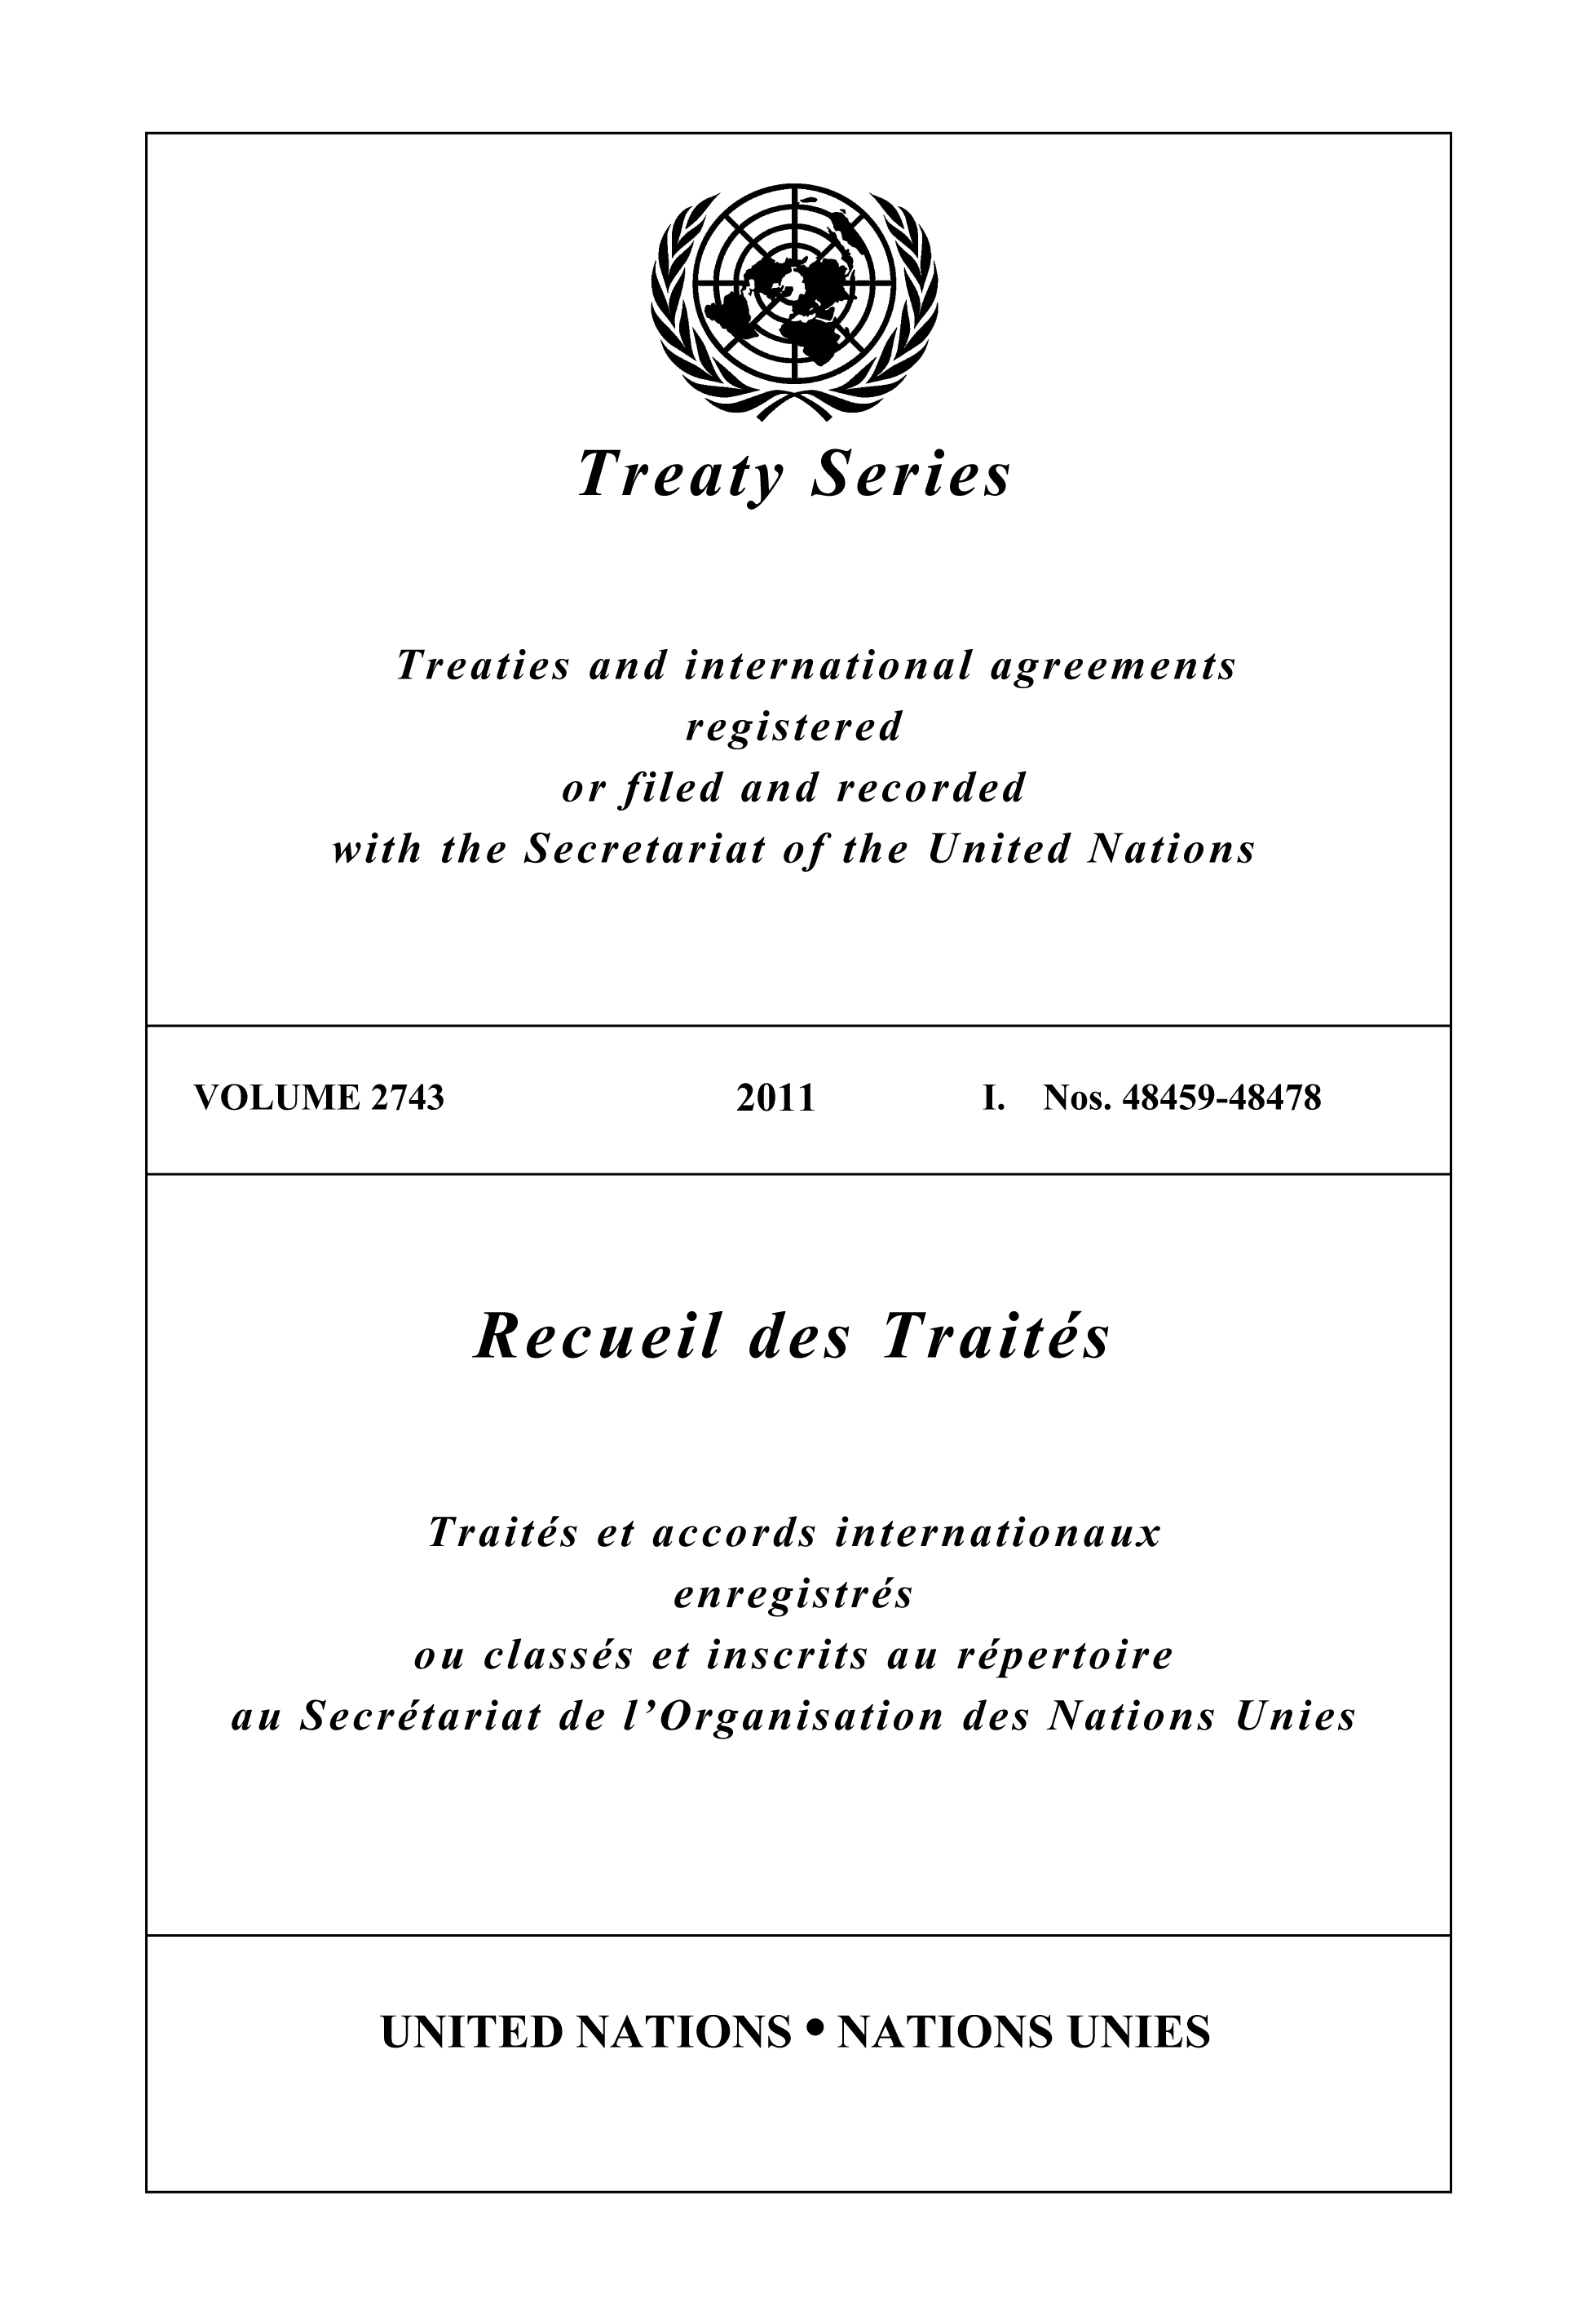 image of Treaty Series 2743